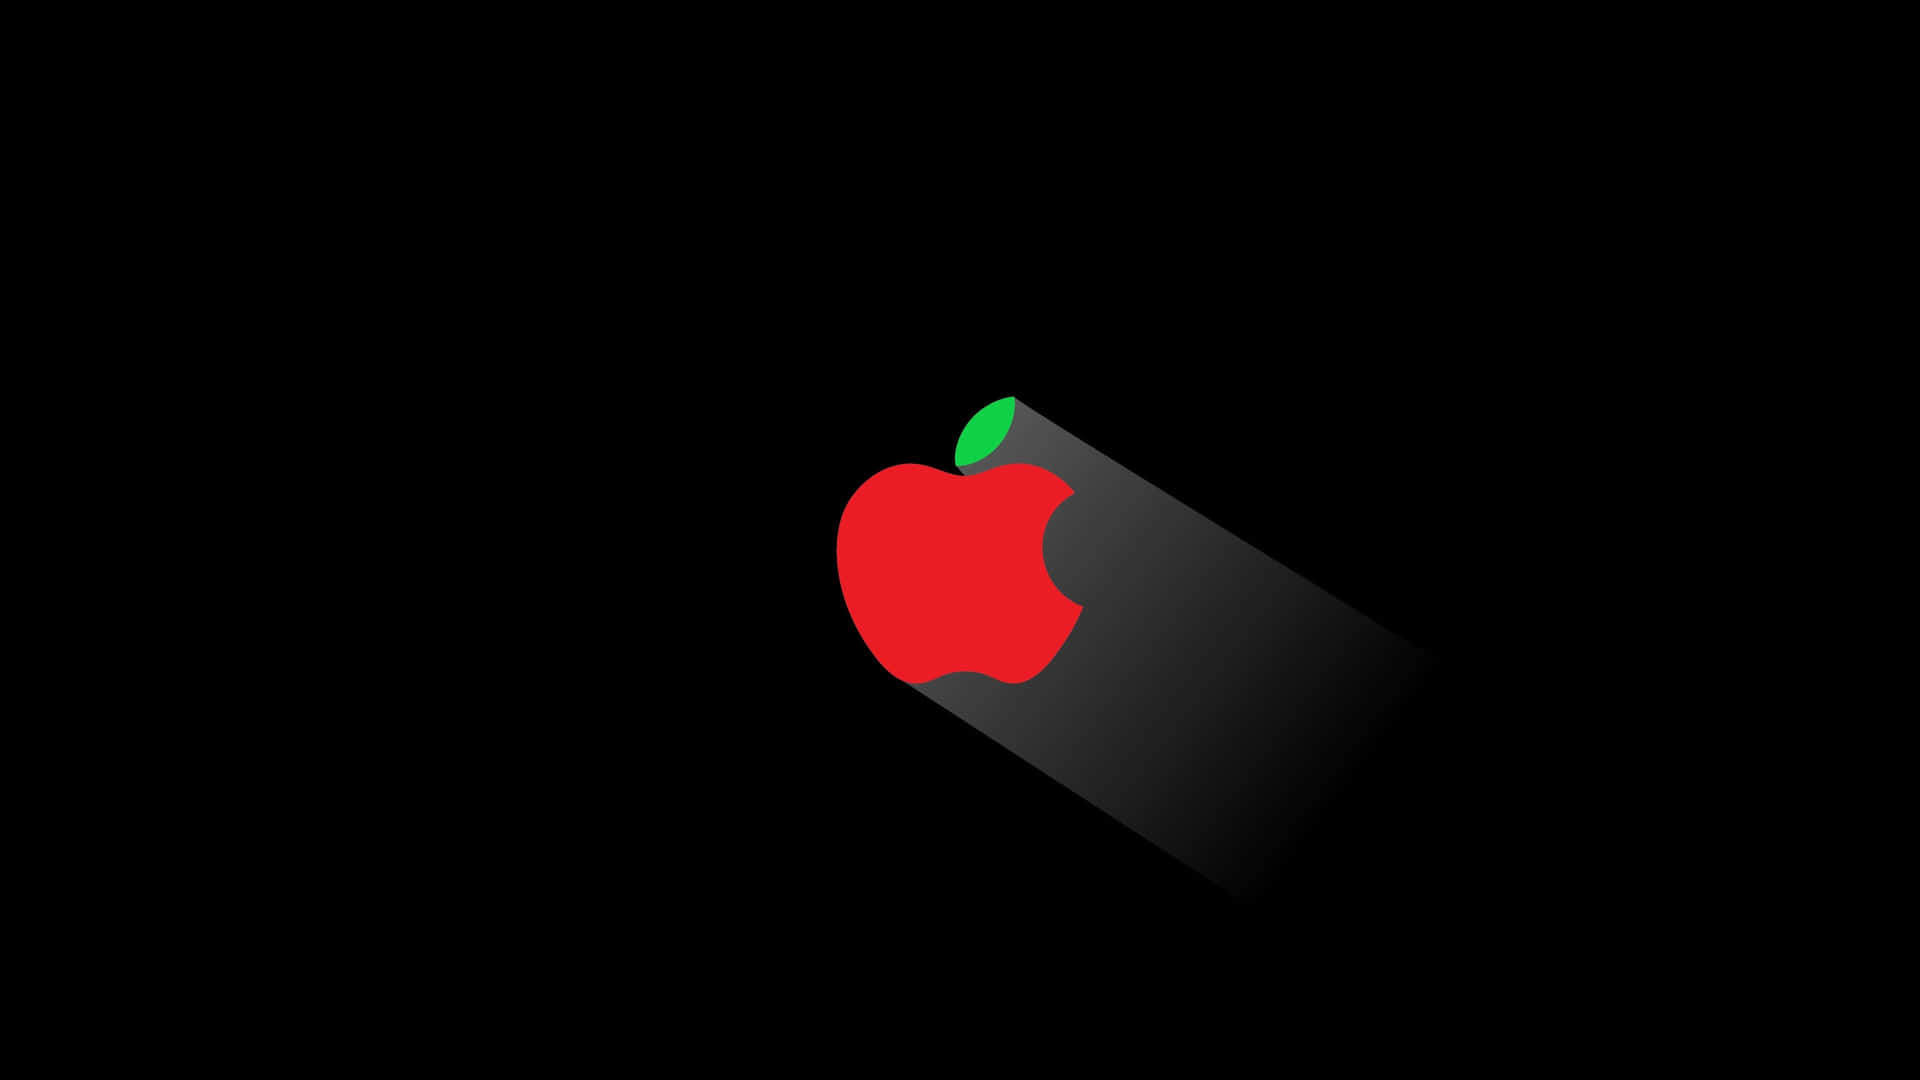 Unlogotipo De Apple Con Resolución 4k En Un Fondo Negro. Fondo de pantalla